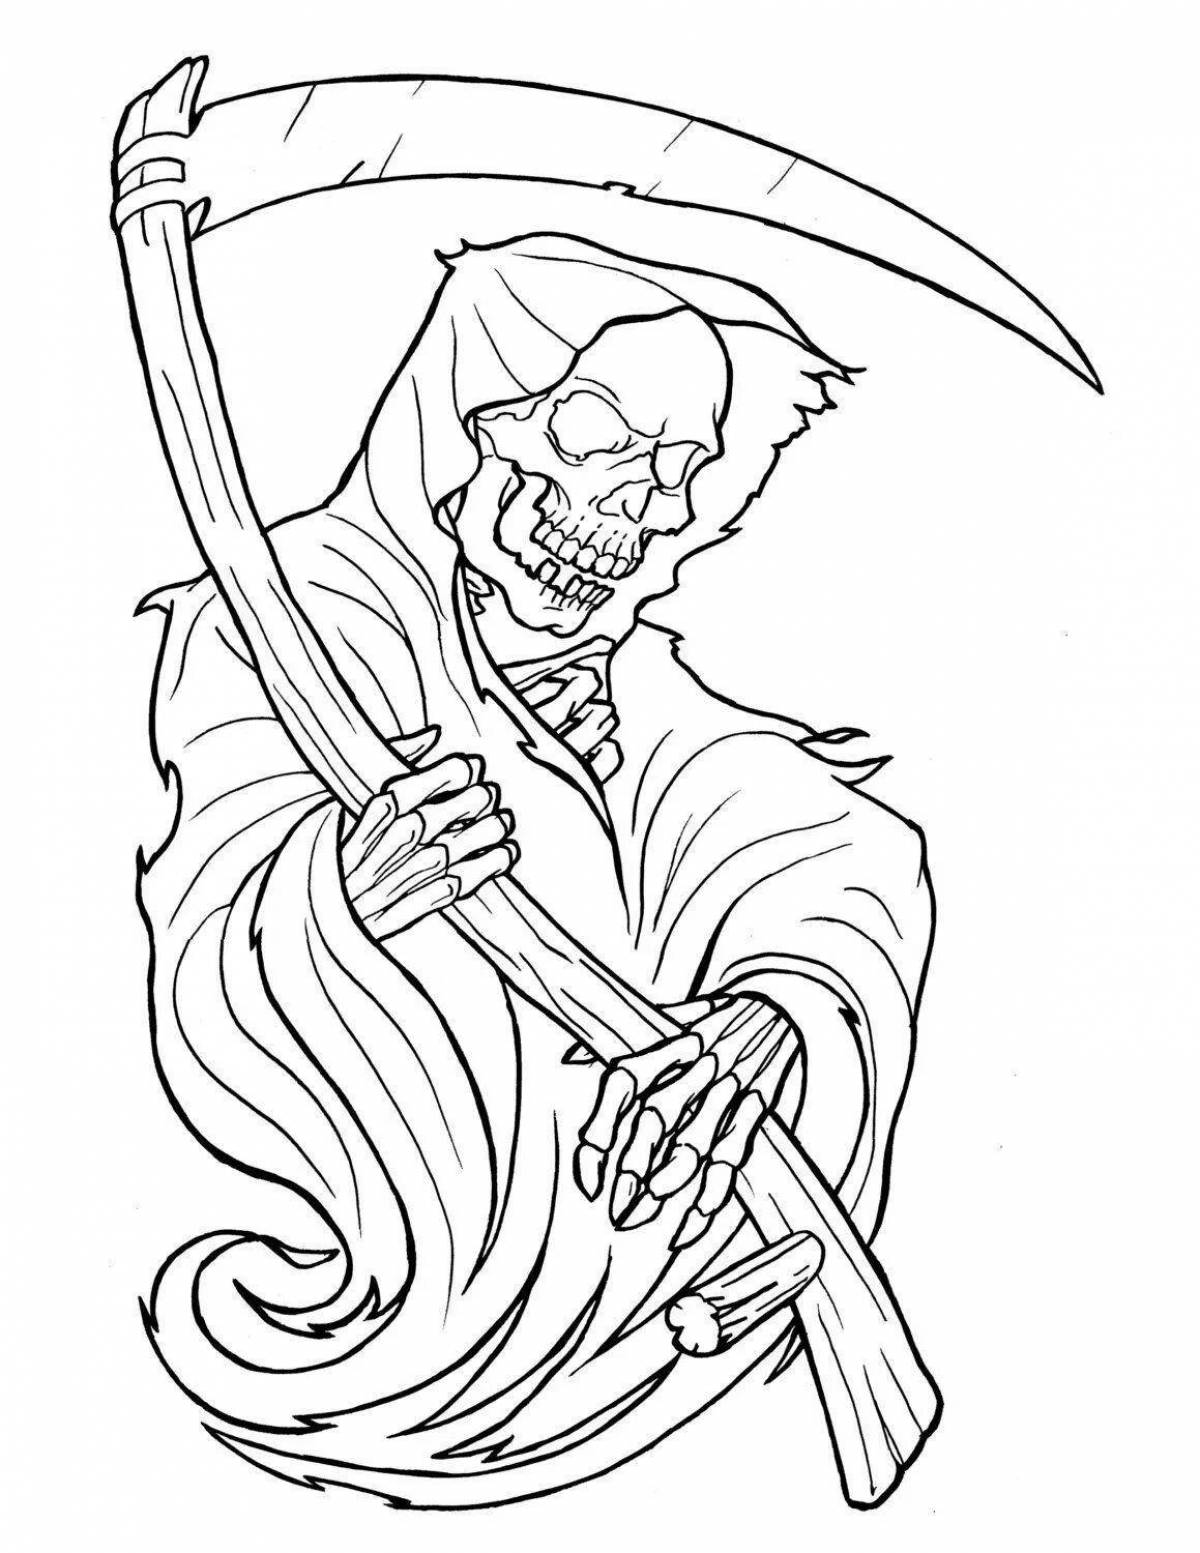 Grotesque grim reaper coloring book